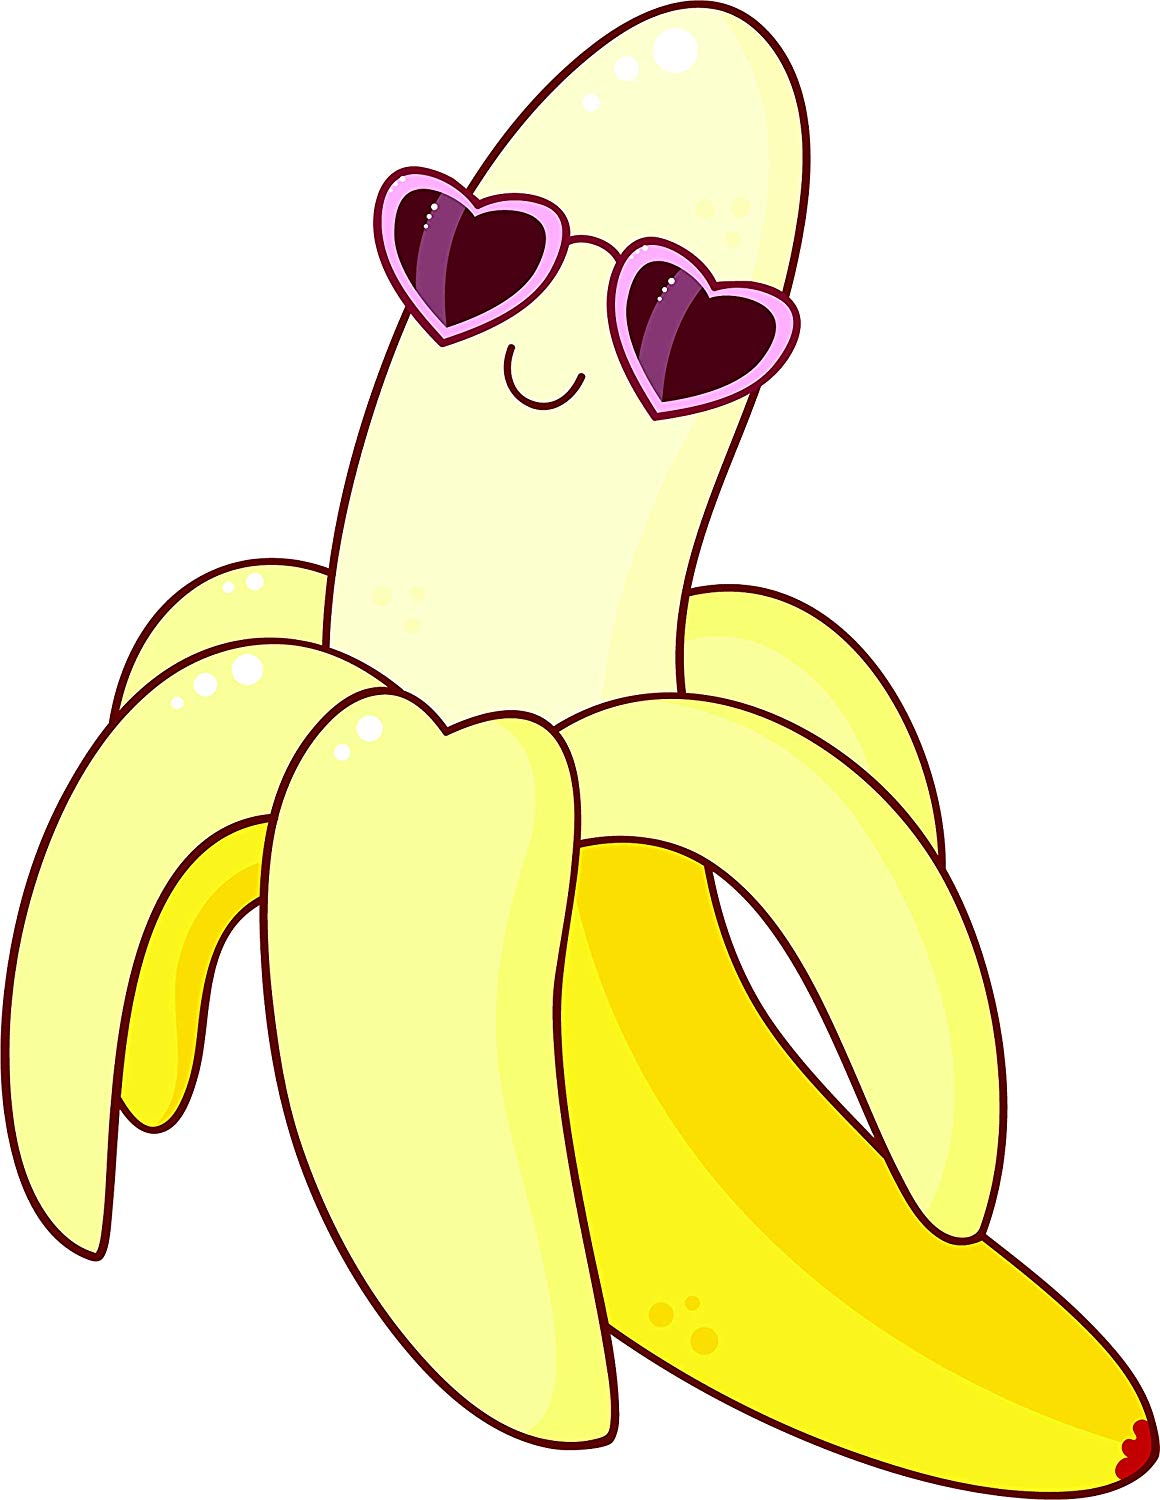 Kawaii clipart banana, Kawaii banana Transparent FREE for ...